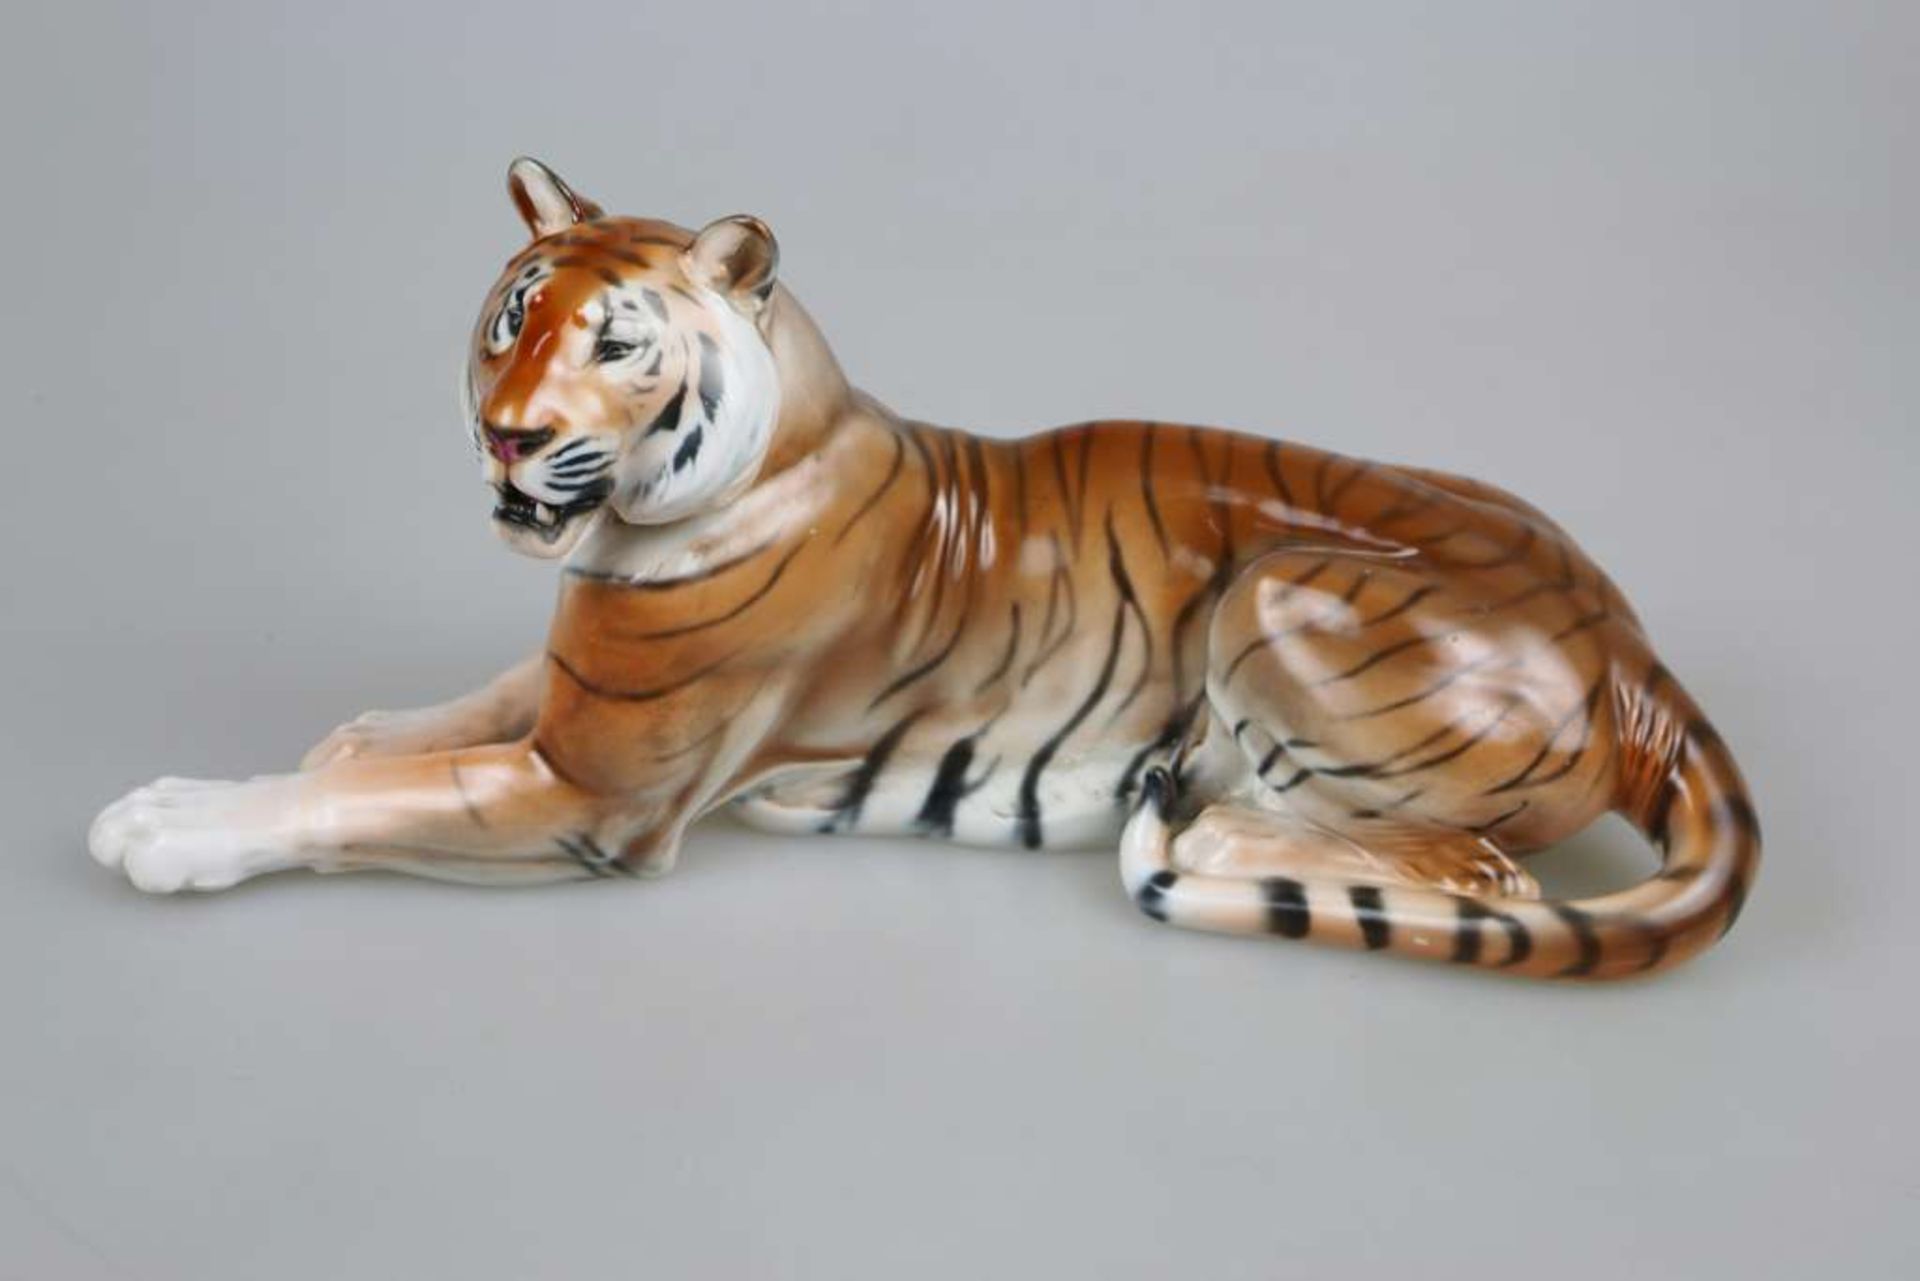 Rosenthal Porzellan um 1930, großer liegender Tiger, Modellnummer 284, Entwurf: Theodor Kärner,